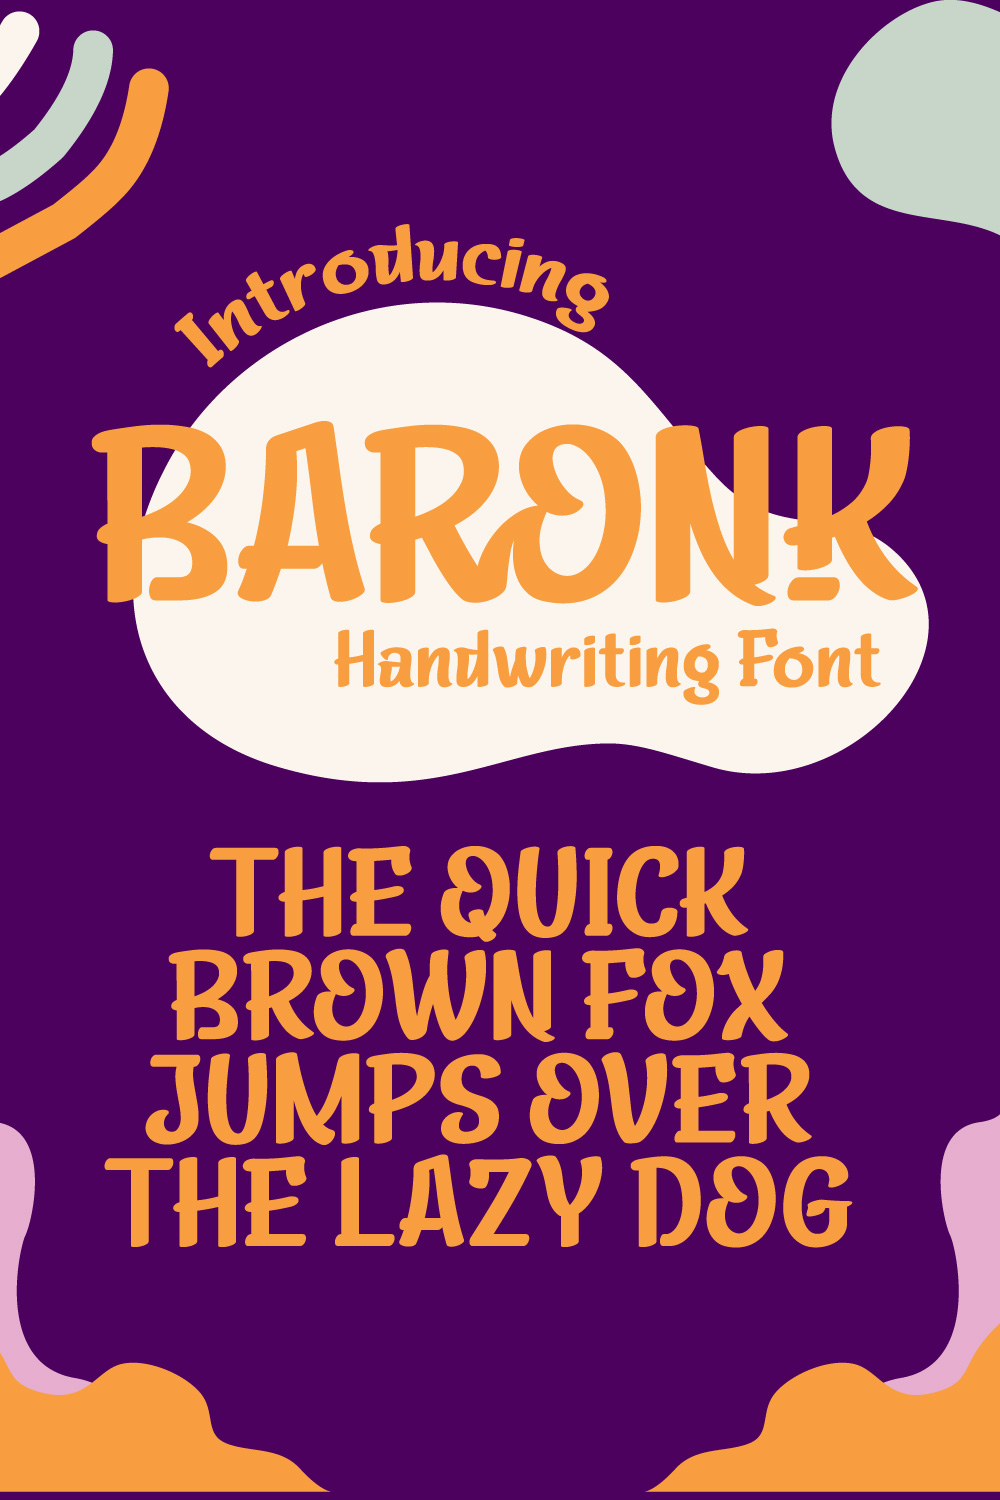 BARONK | Handwriting Display pinterest preview image.